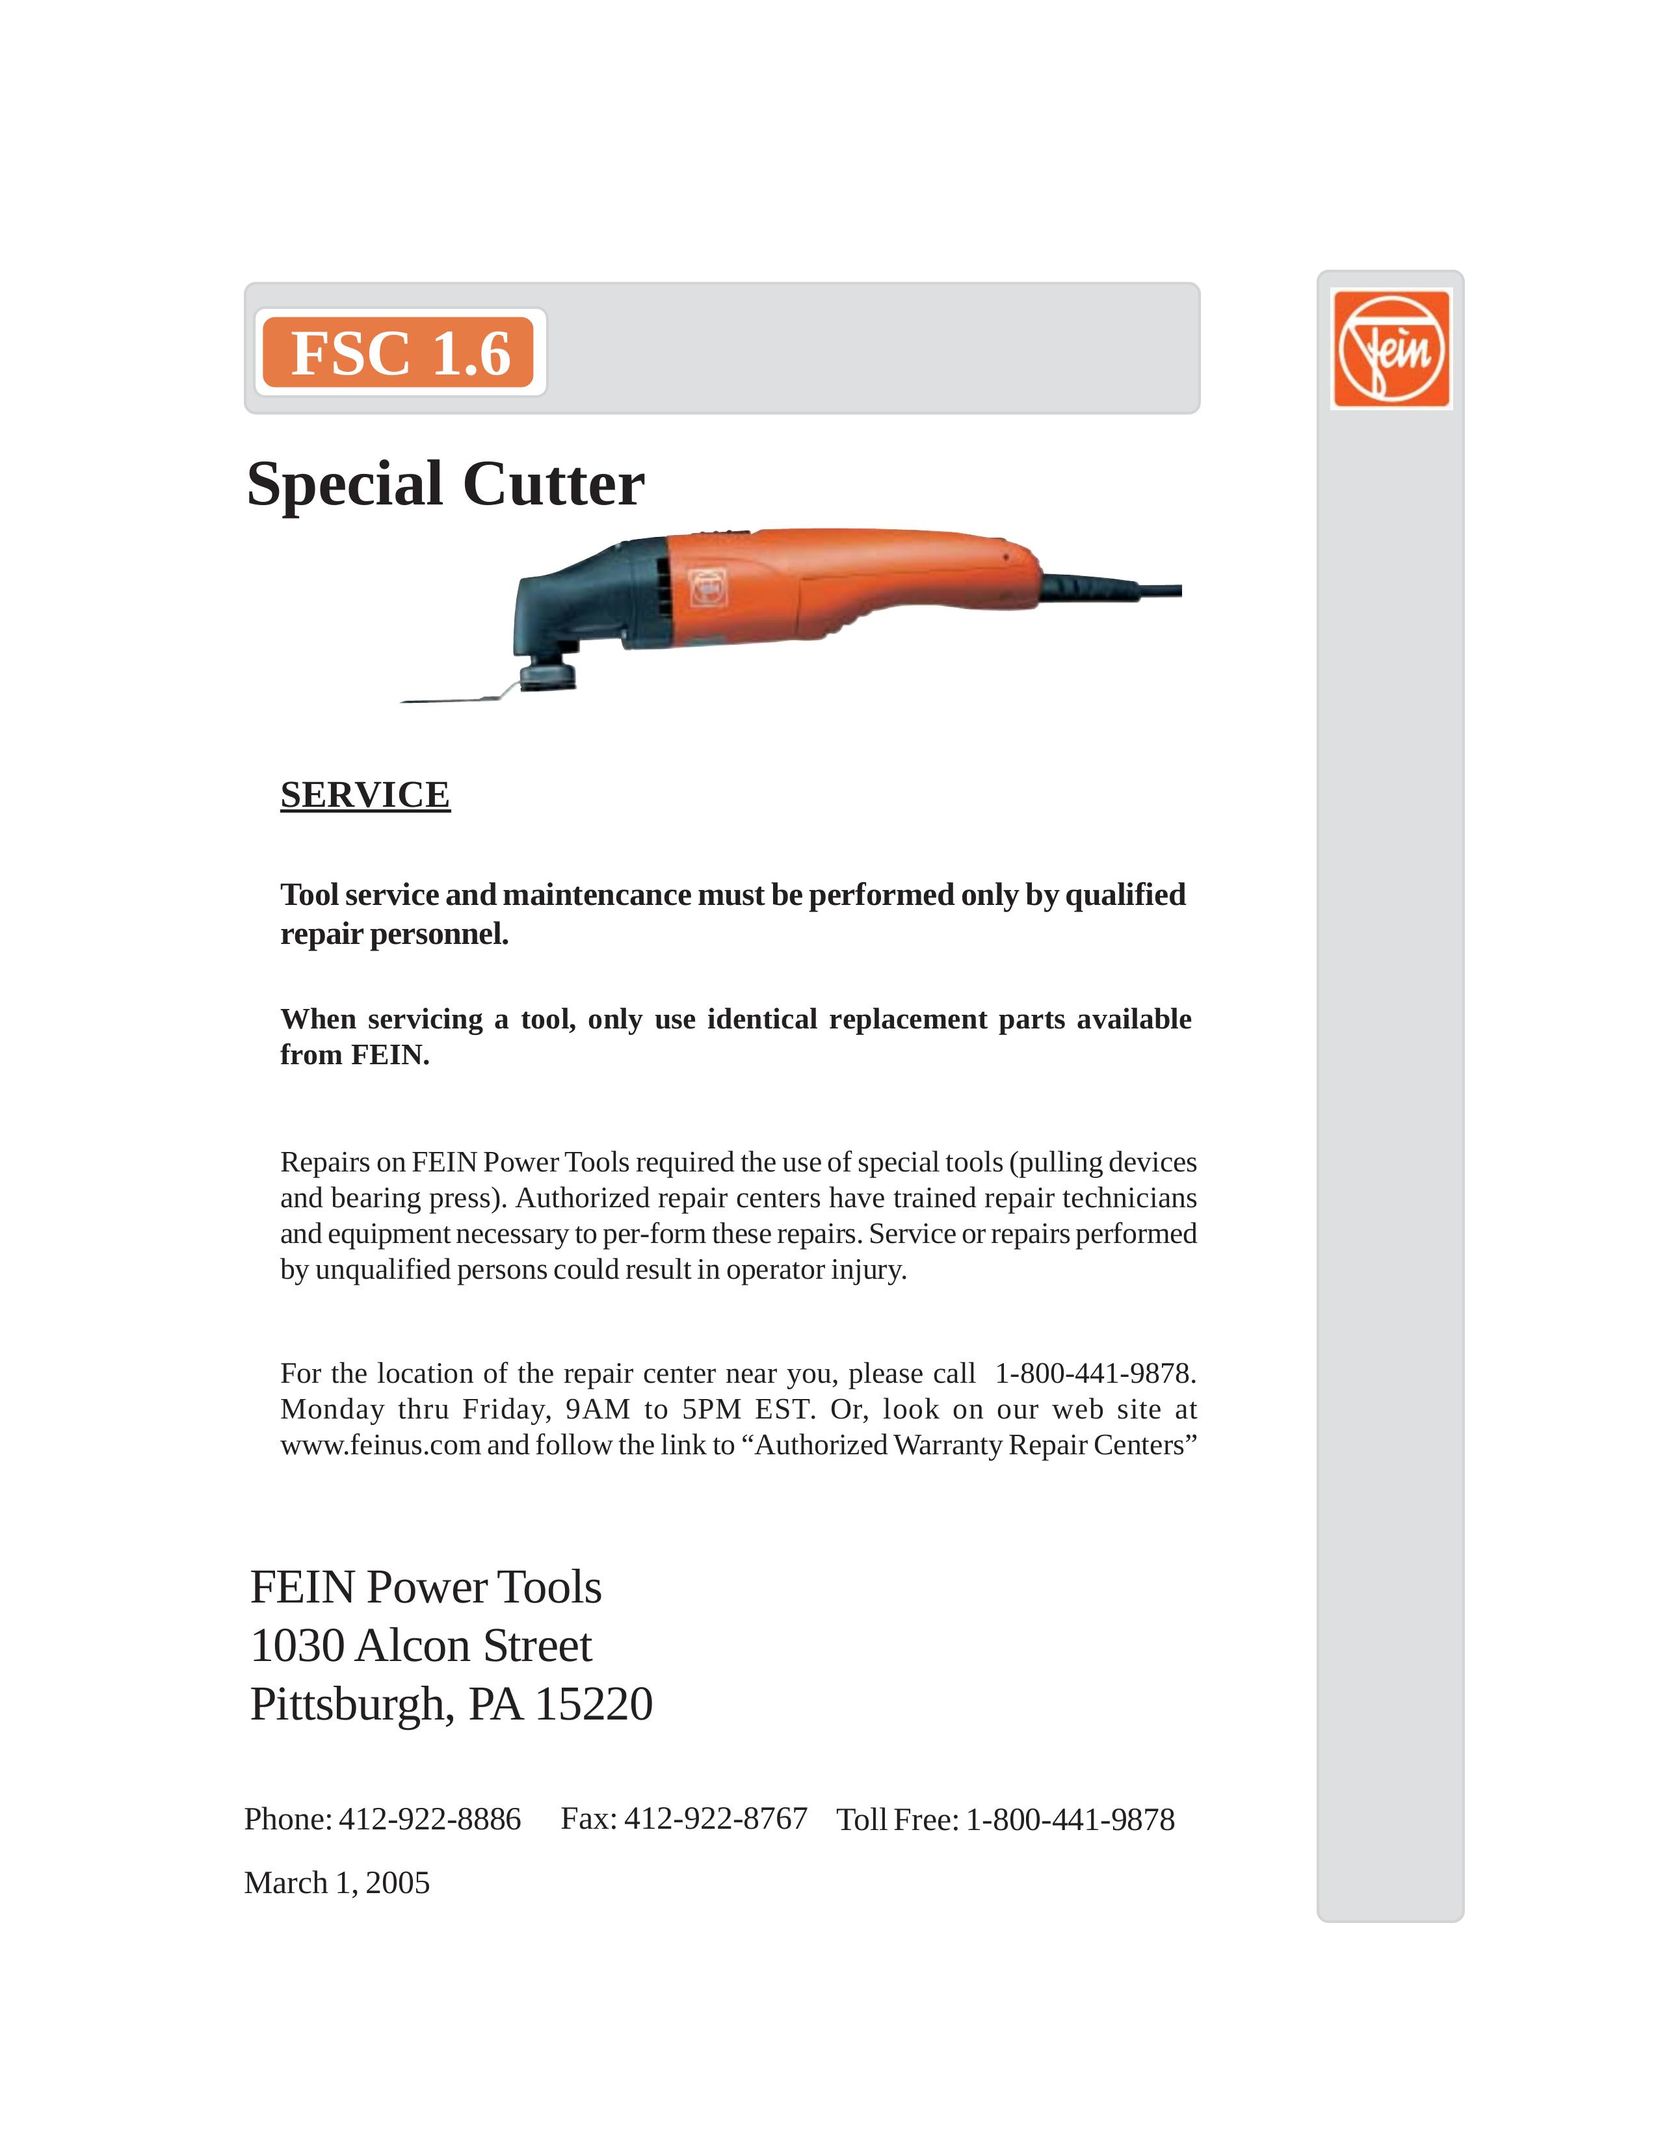 FEIN Power Tools FSC 1.6 Welder User Manual